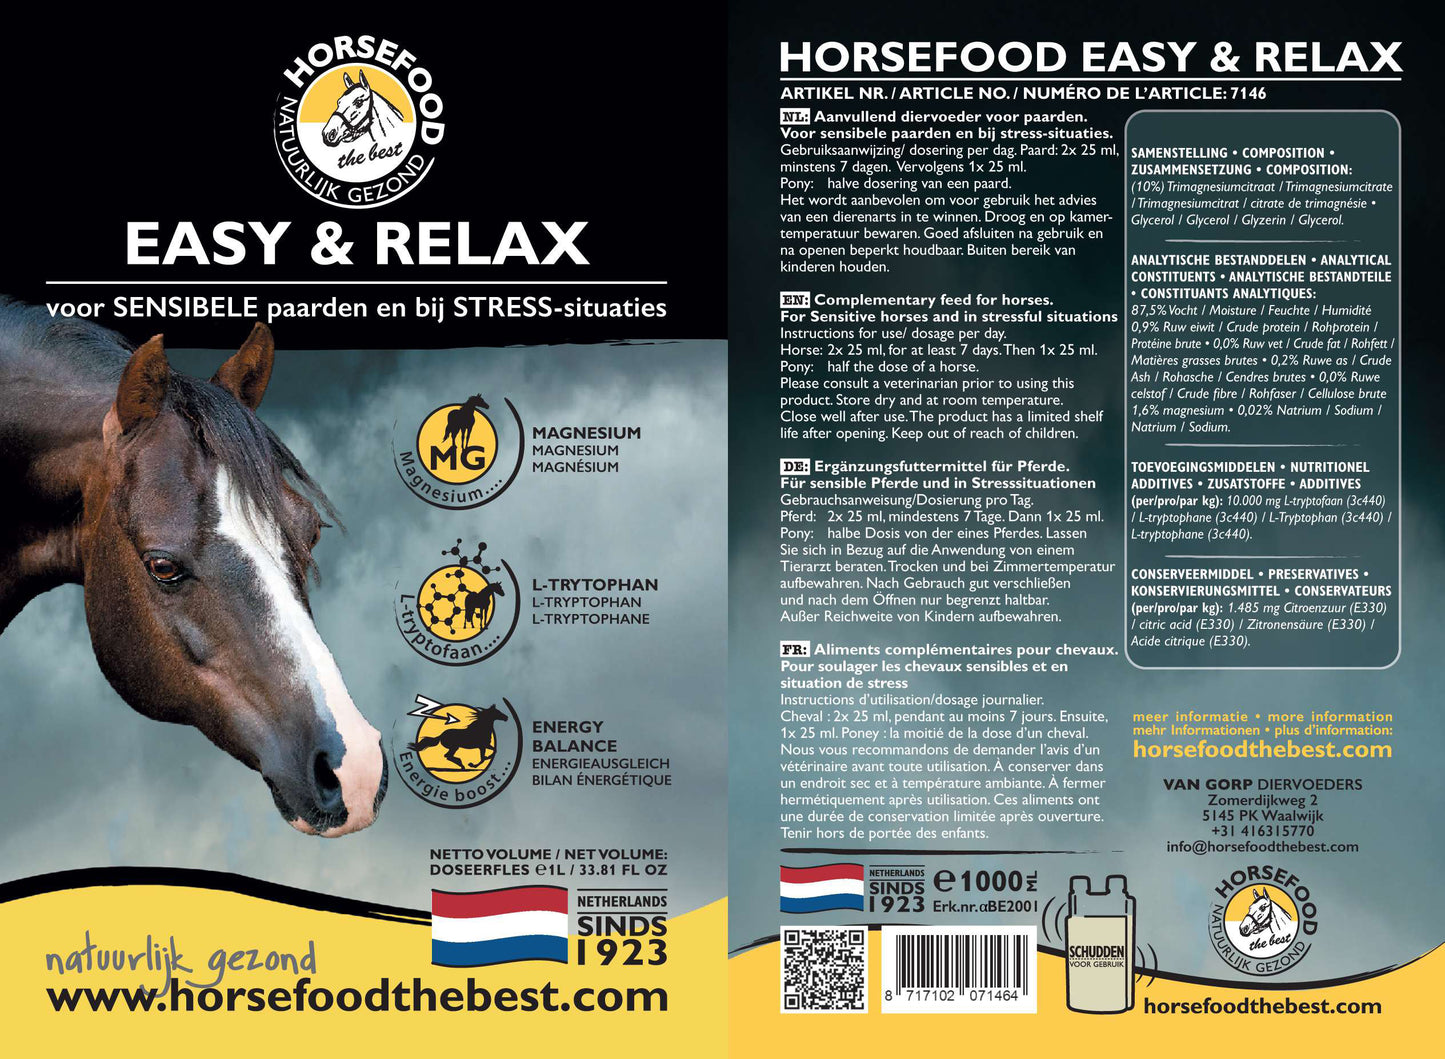 Horsefood Easy & Relax